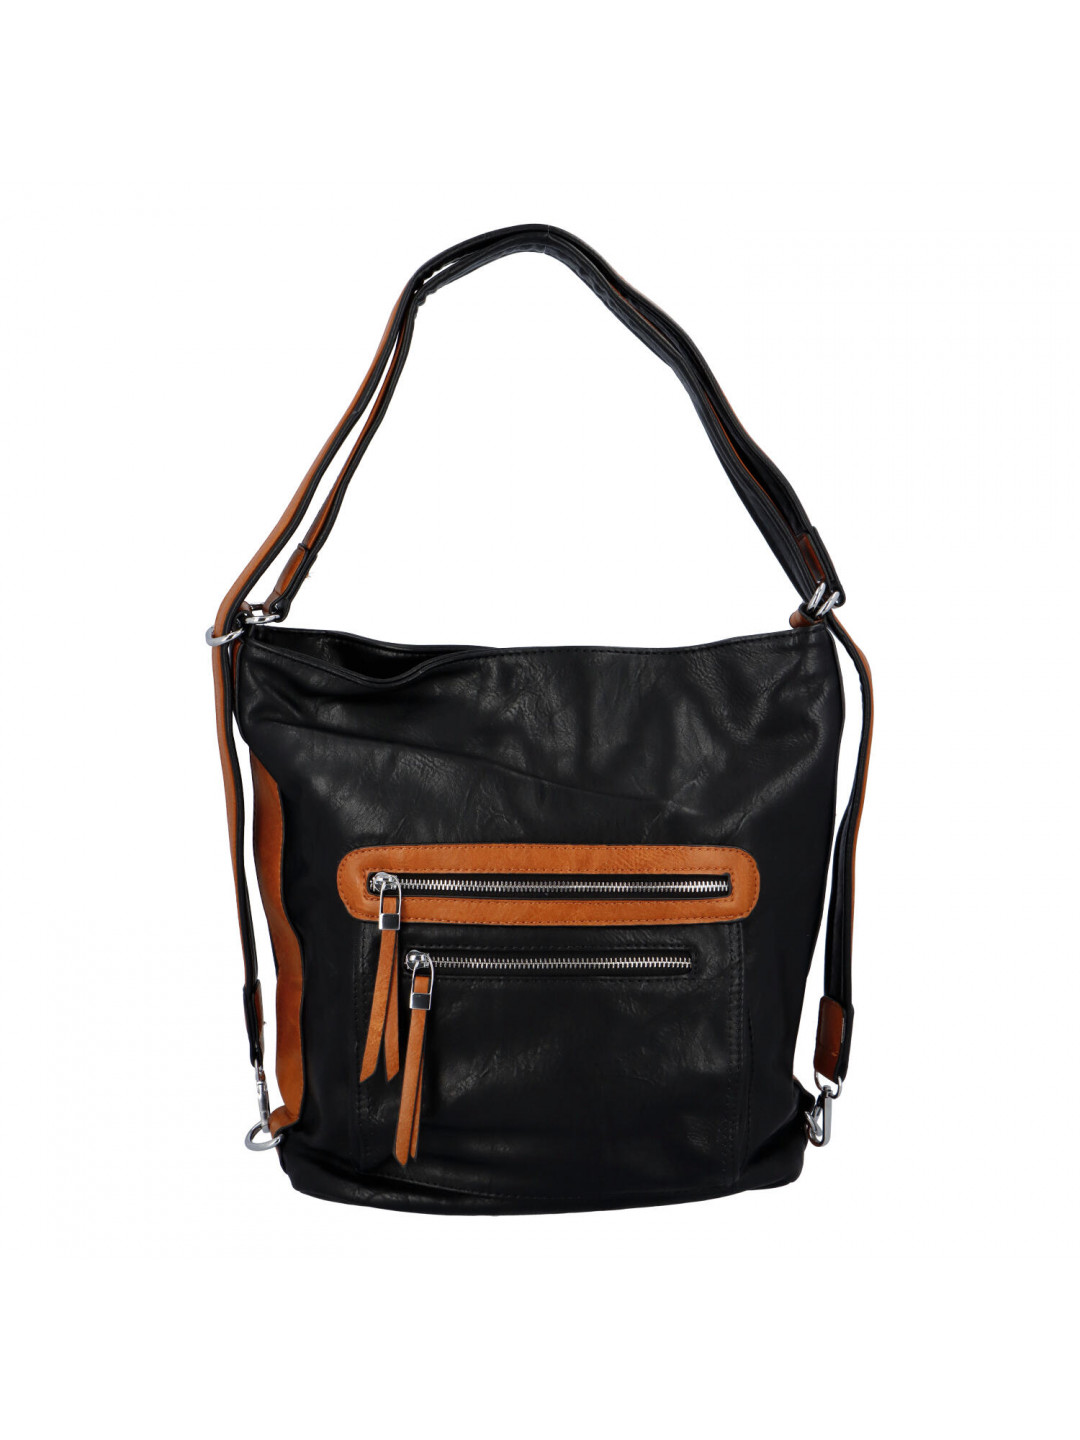 Dámská praktická koženková kabelka batoh Frankie černá